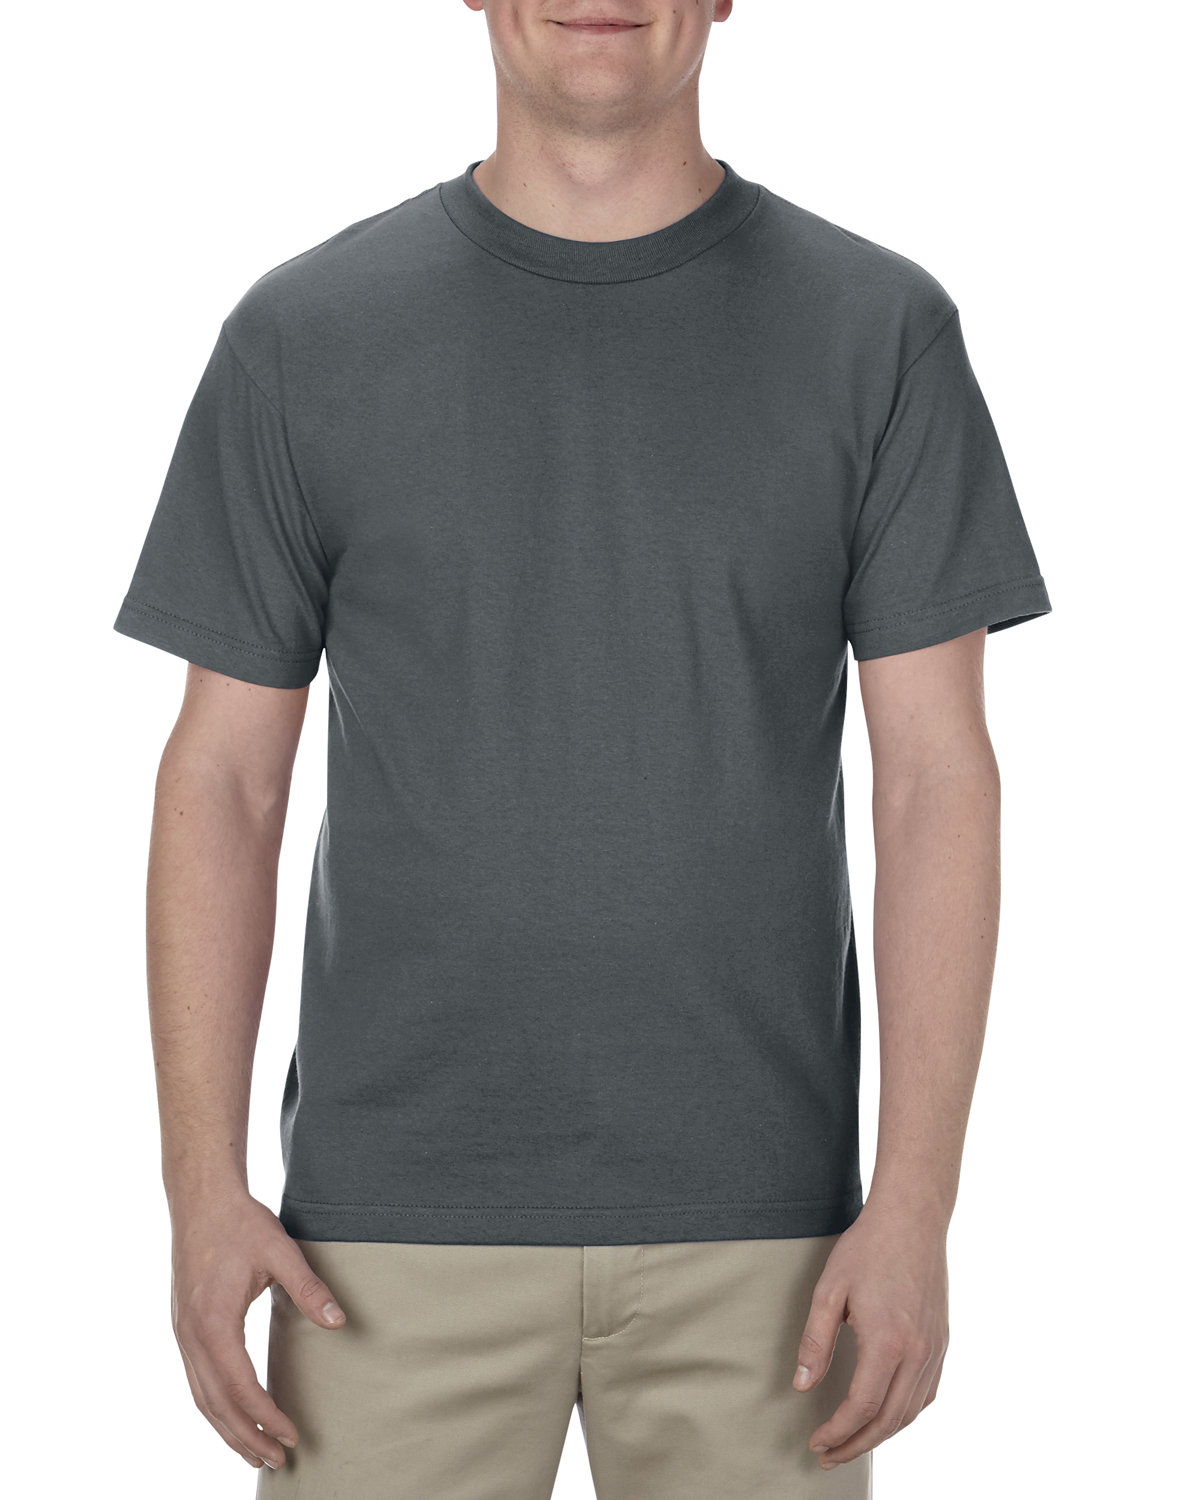 American Apparel Adult 6.0 oz., 100% Cotton T-Shirt CHARCOAL 